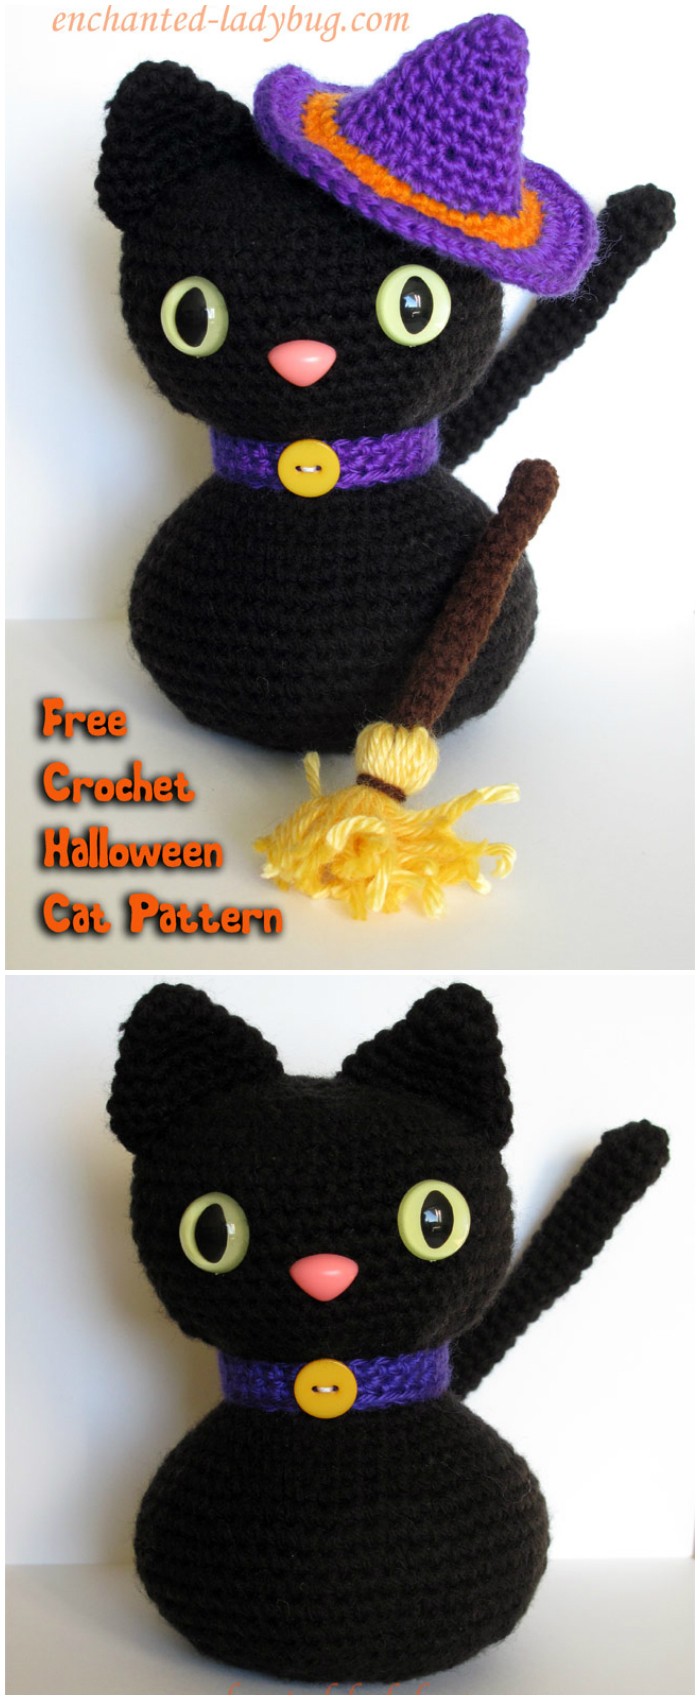 Free Crochet Amigurumi Halloween Black Cat